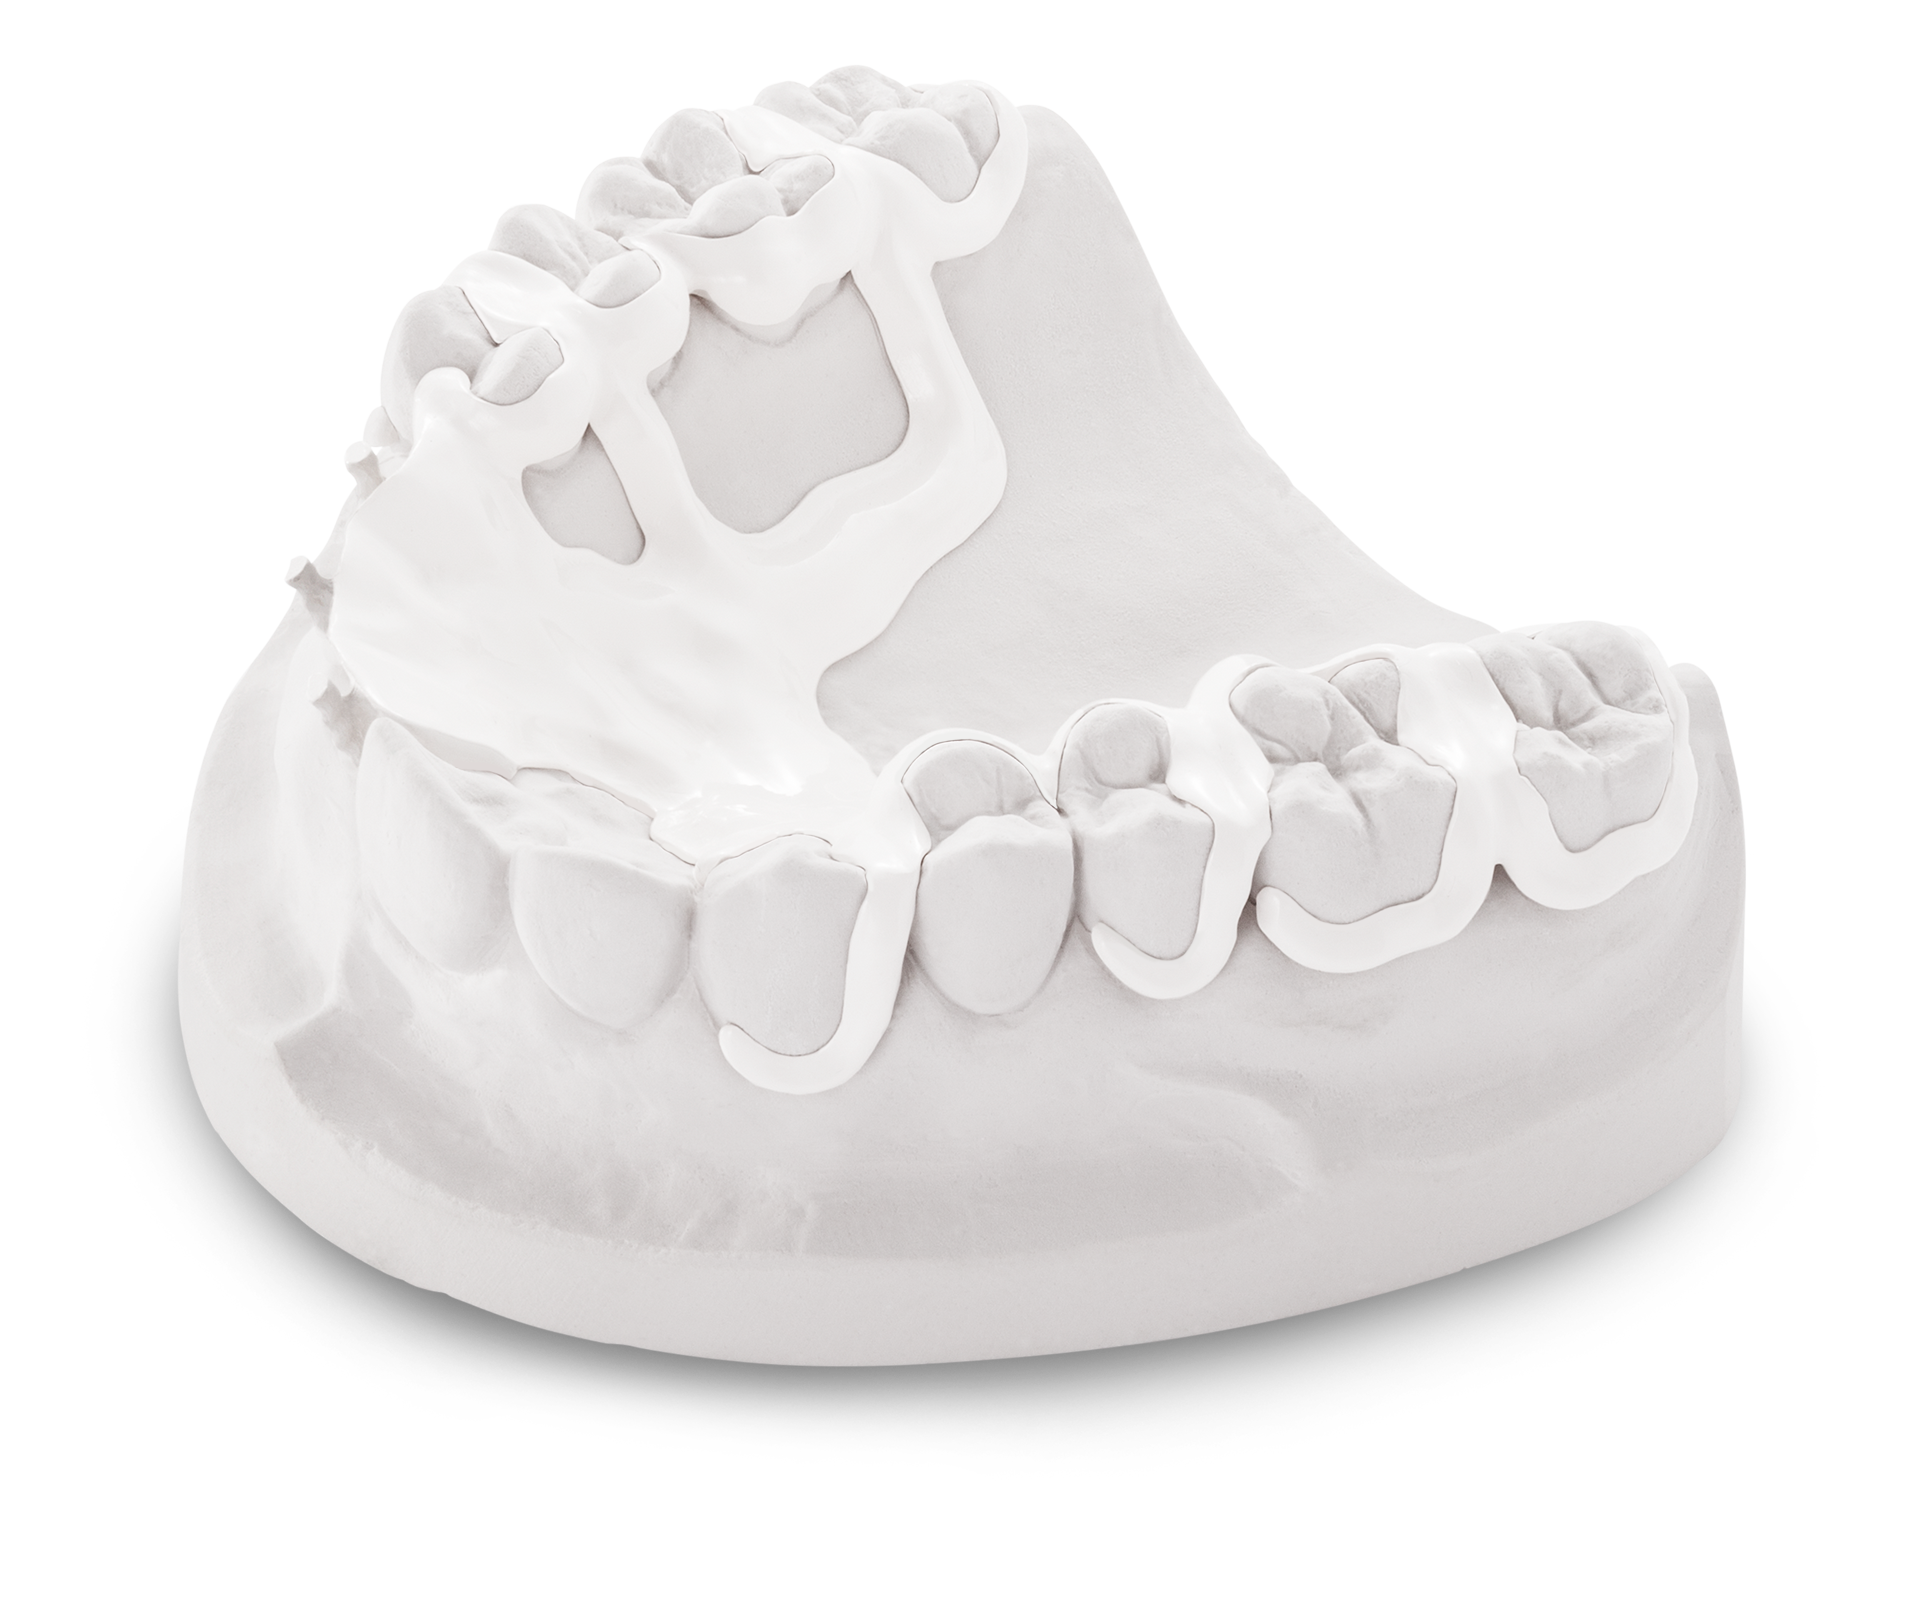 PEEK plastic - the alternative for metal-free dentures